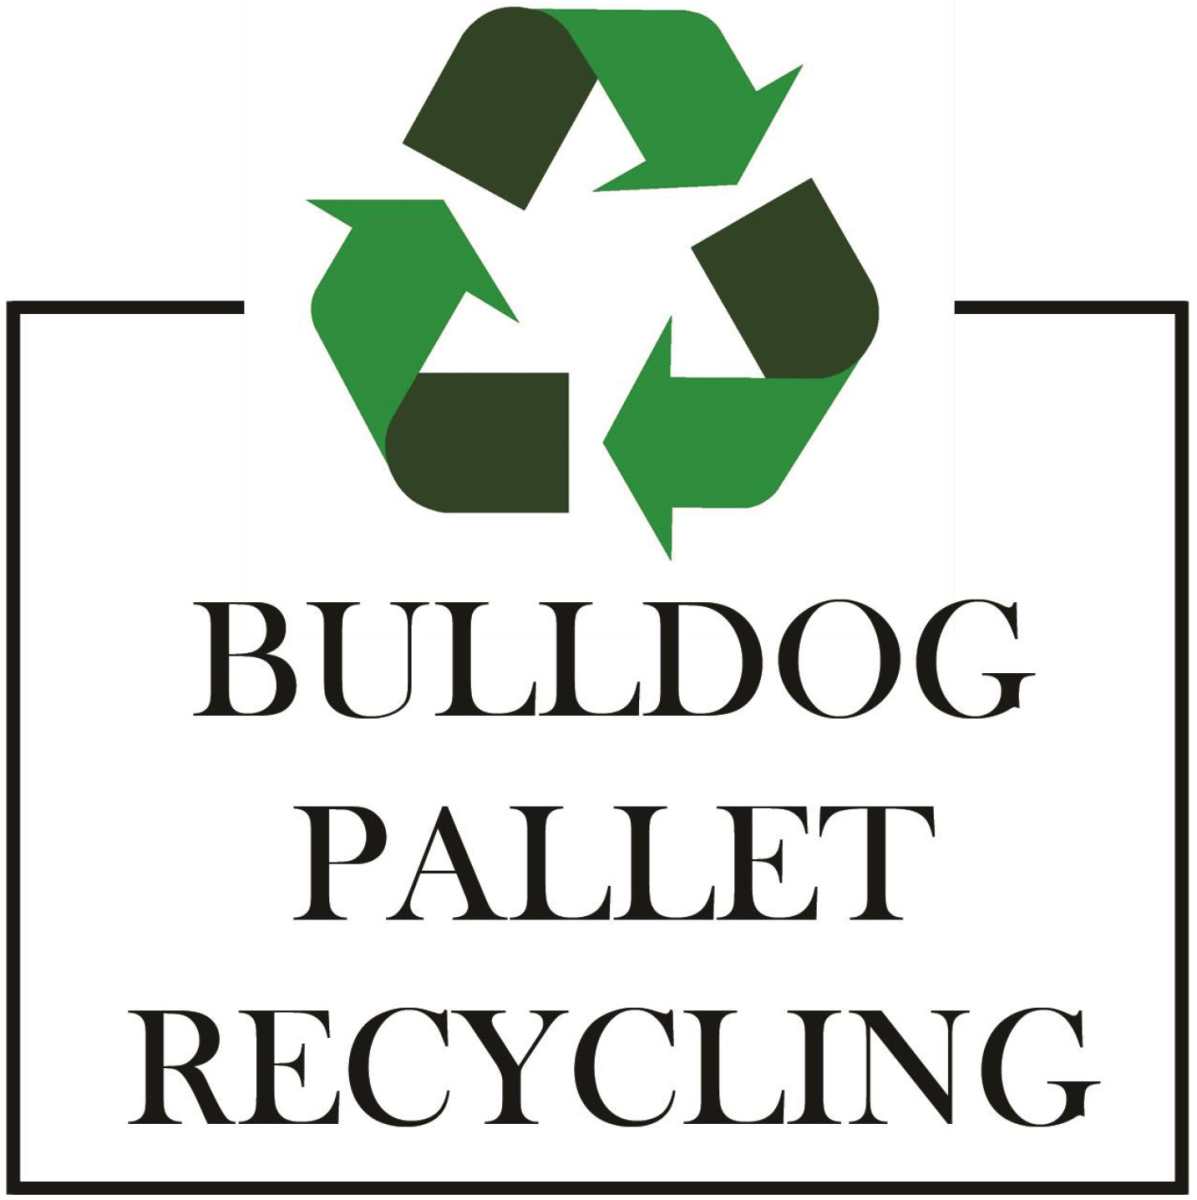 Bulldog Recycling